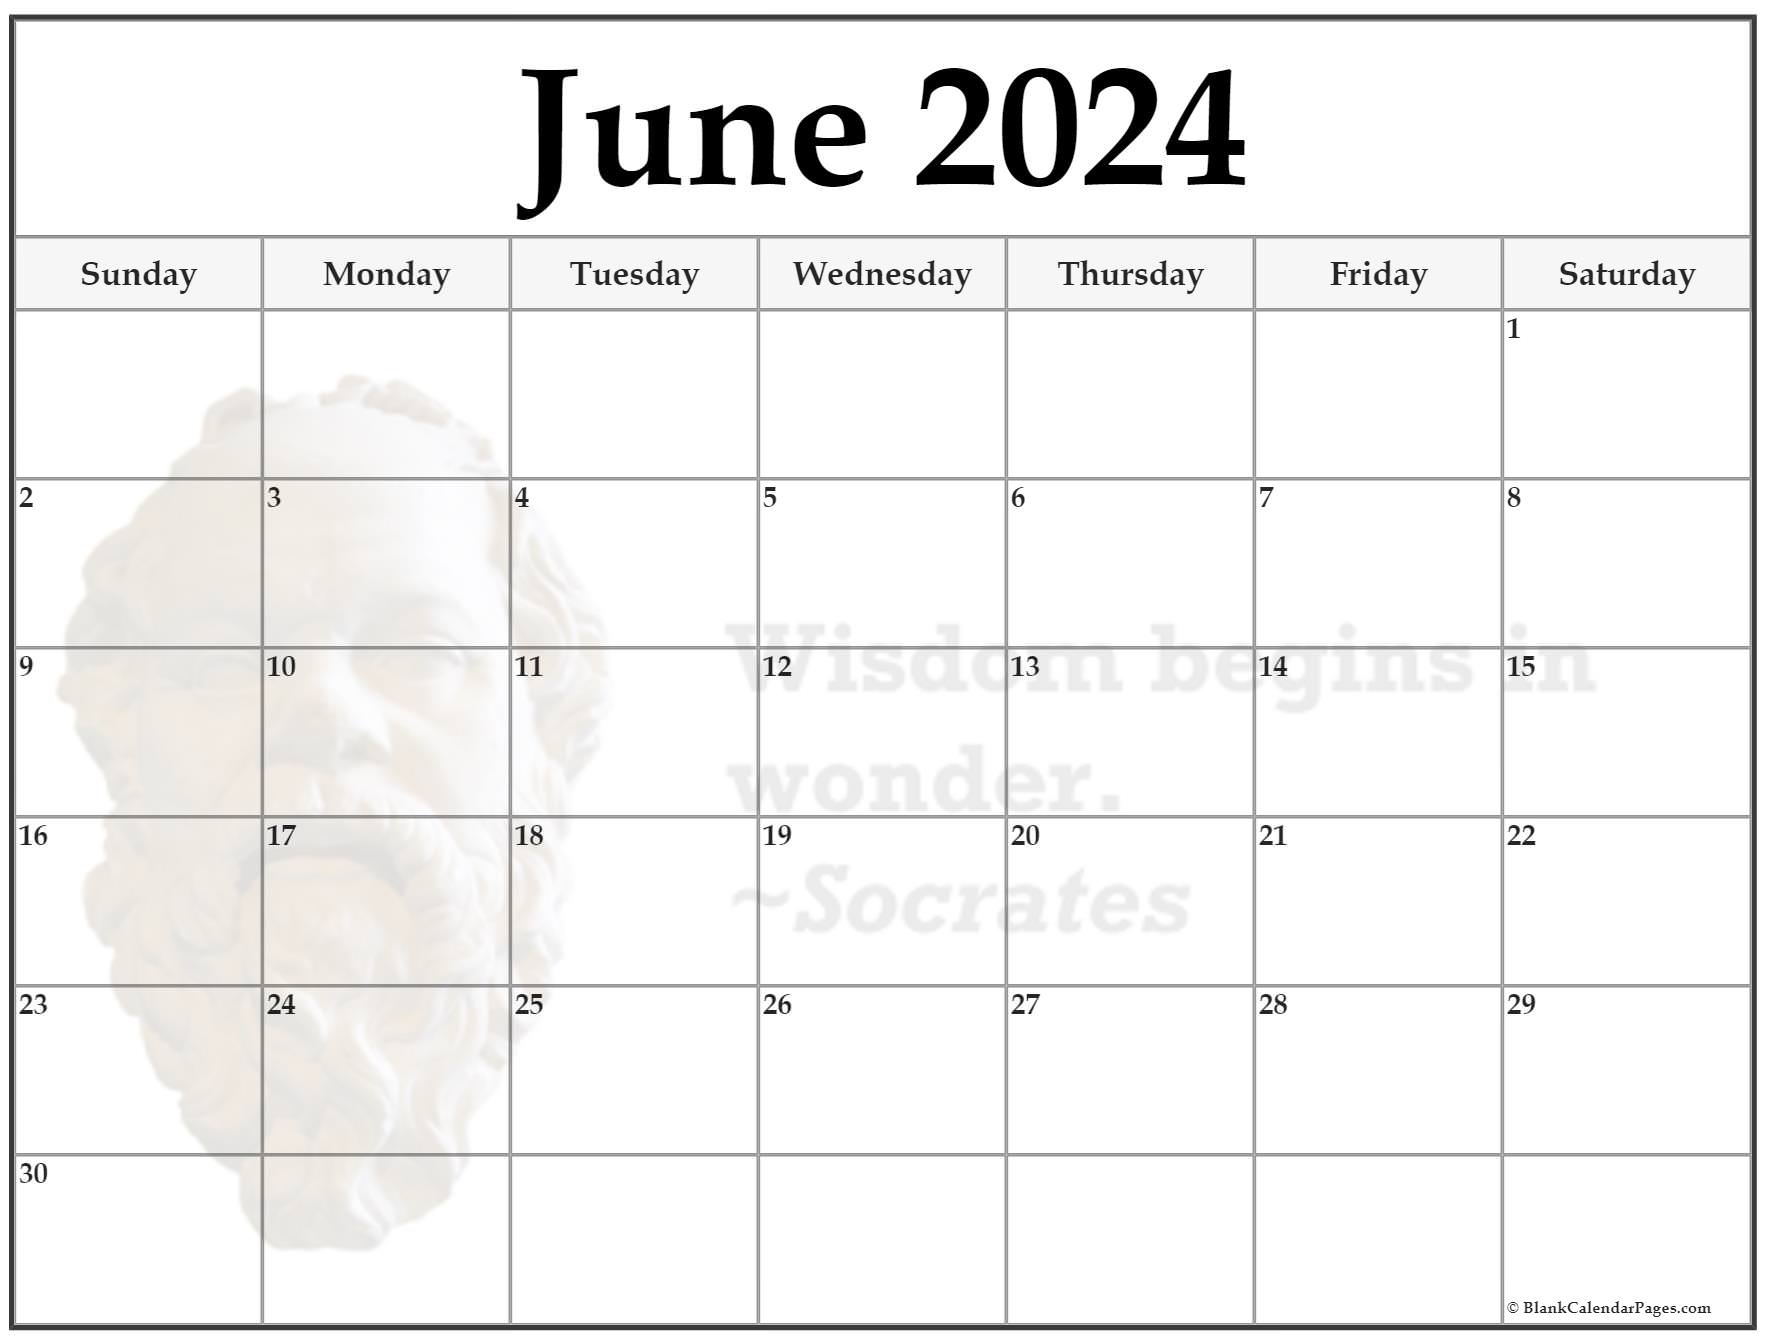 June 2023 календарь. Планер на июнь 2023 года. Календарь июнь 2023. Календарь на июнь 2023 года.